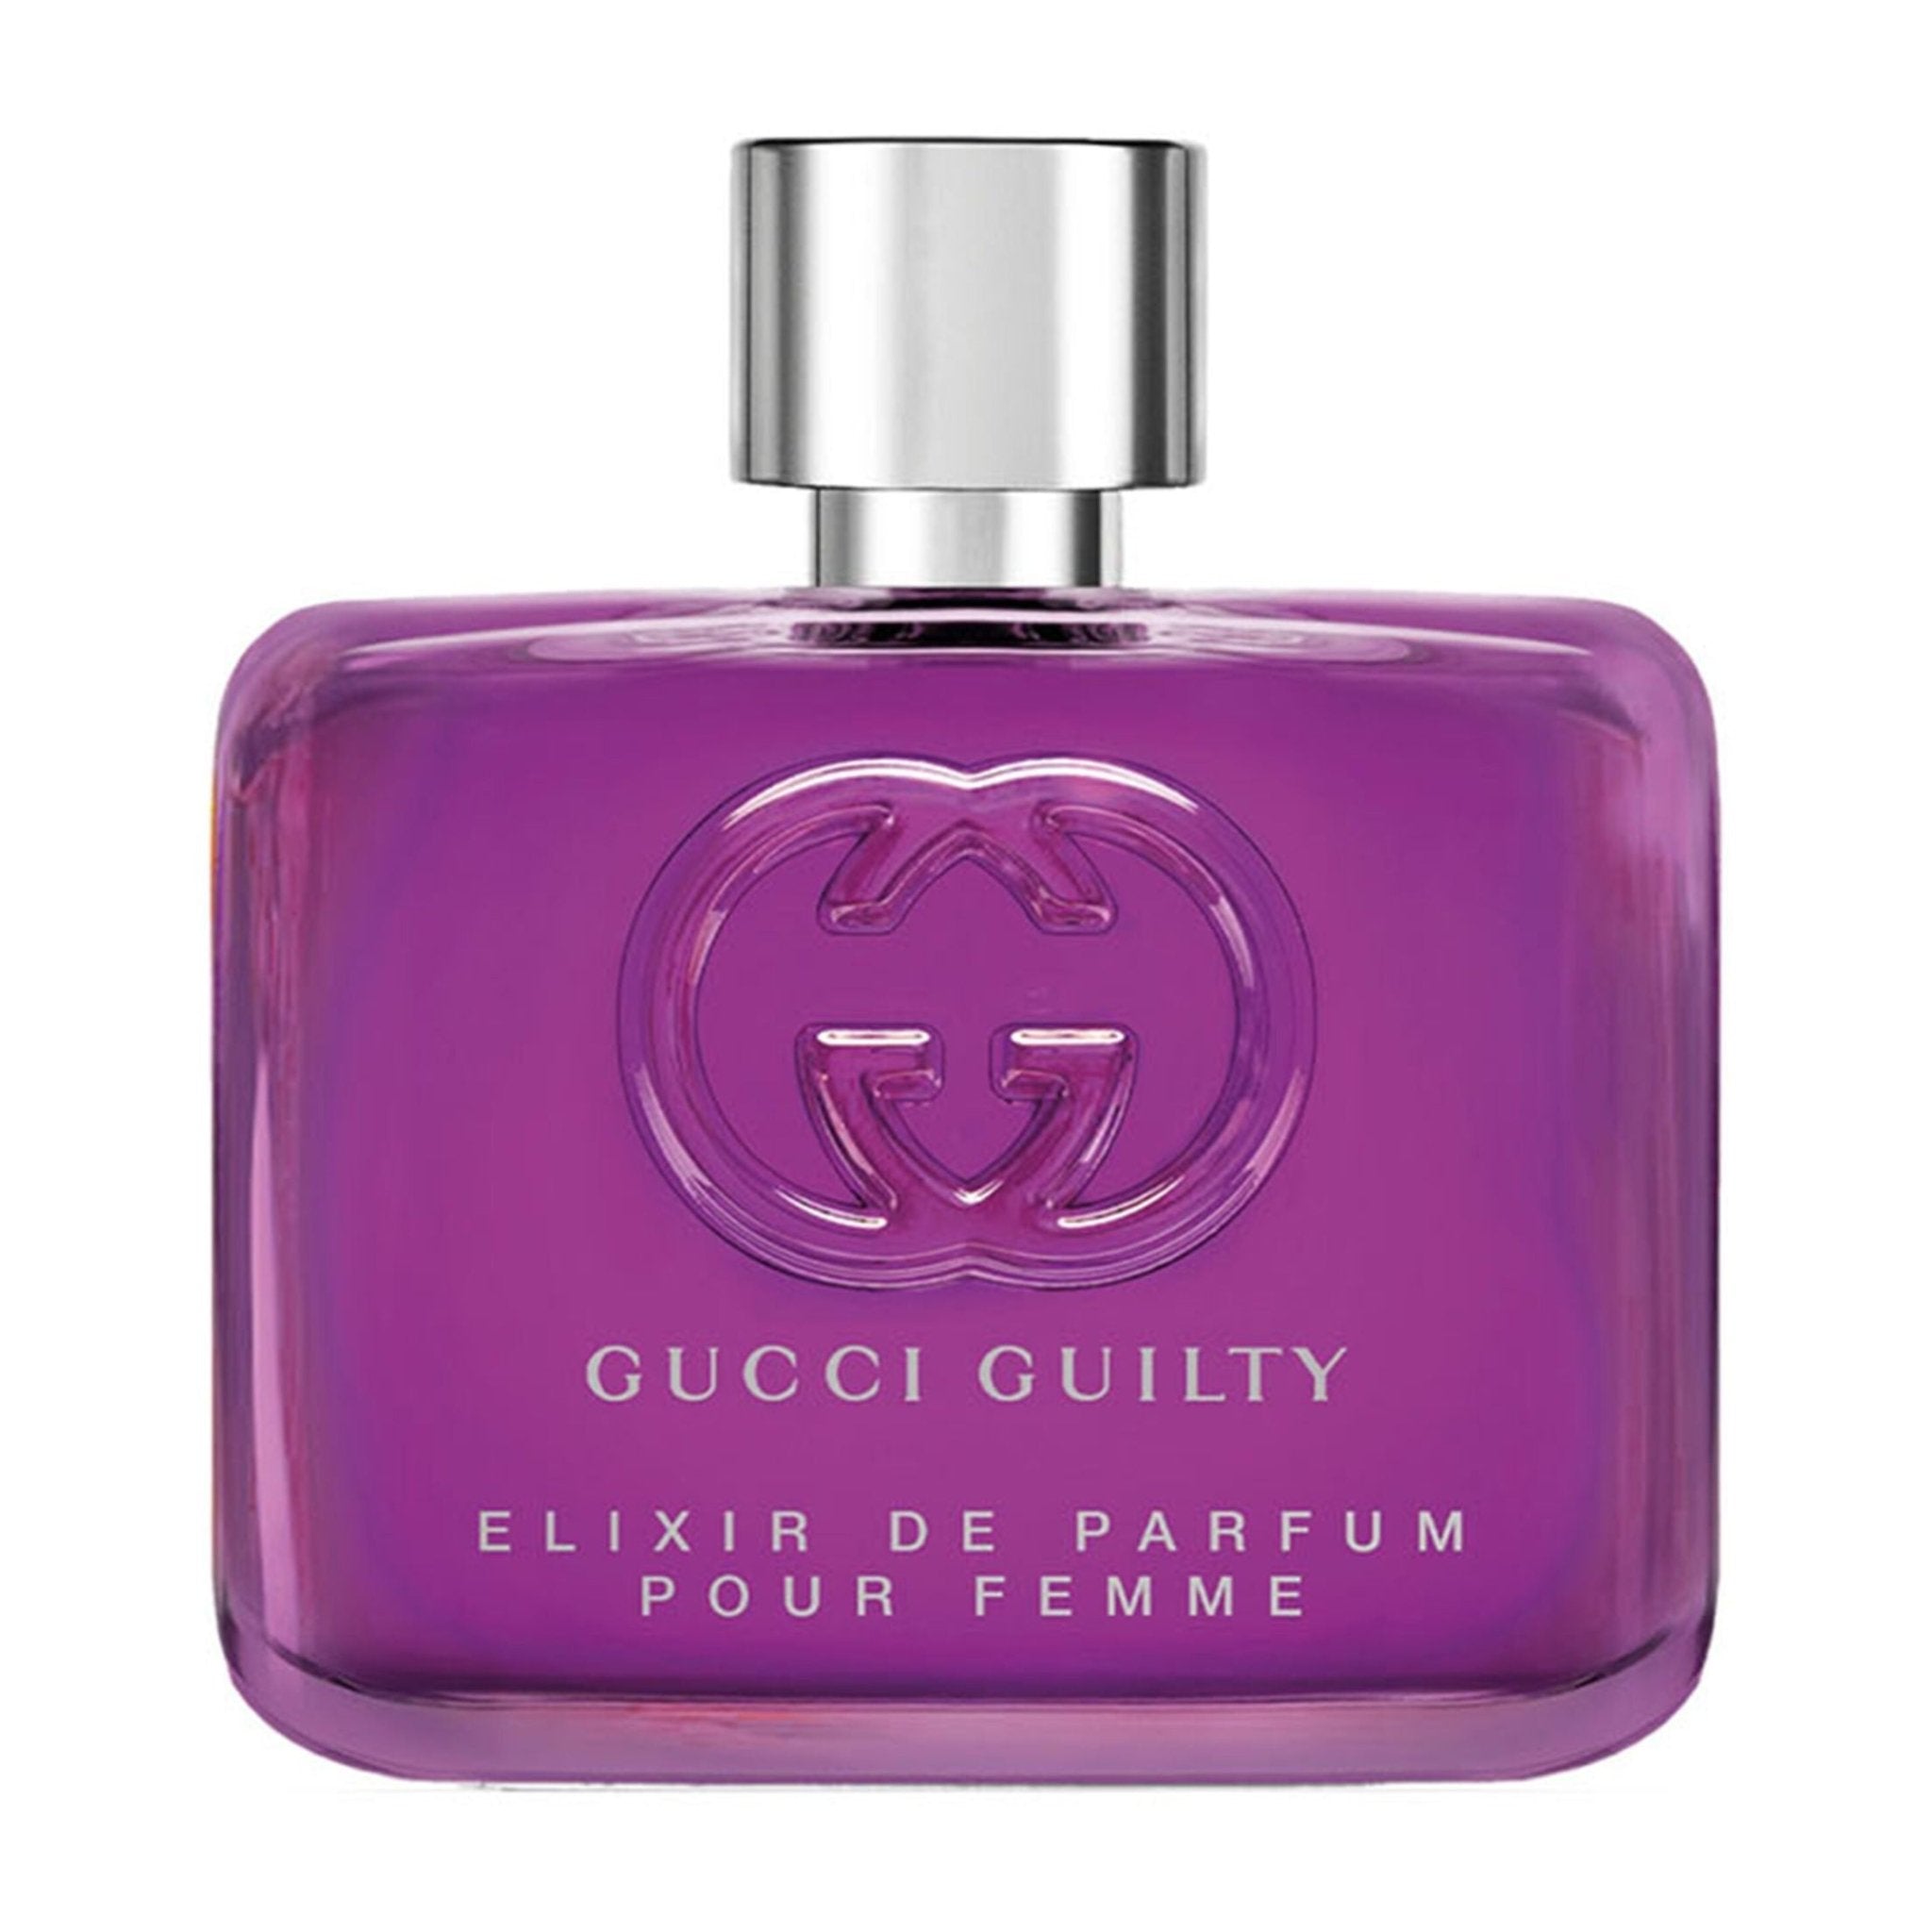 Gucci Guilty Elixir De Parfum For Women - 60ml - Bloom Pharmacy